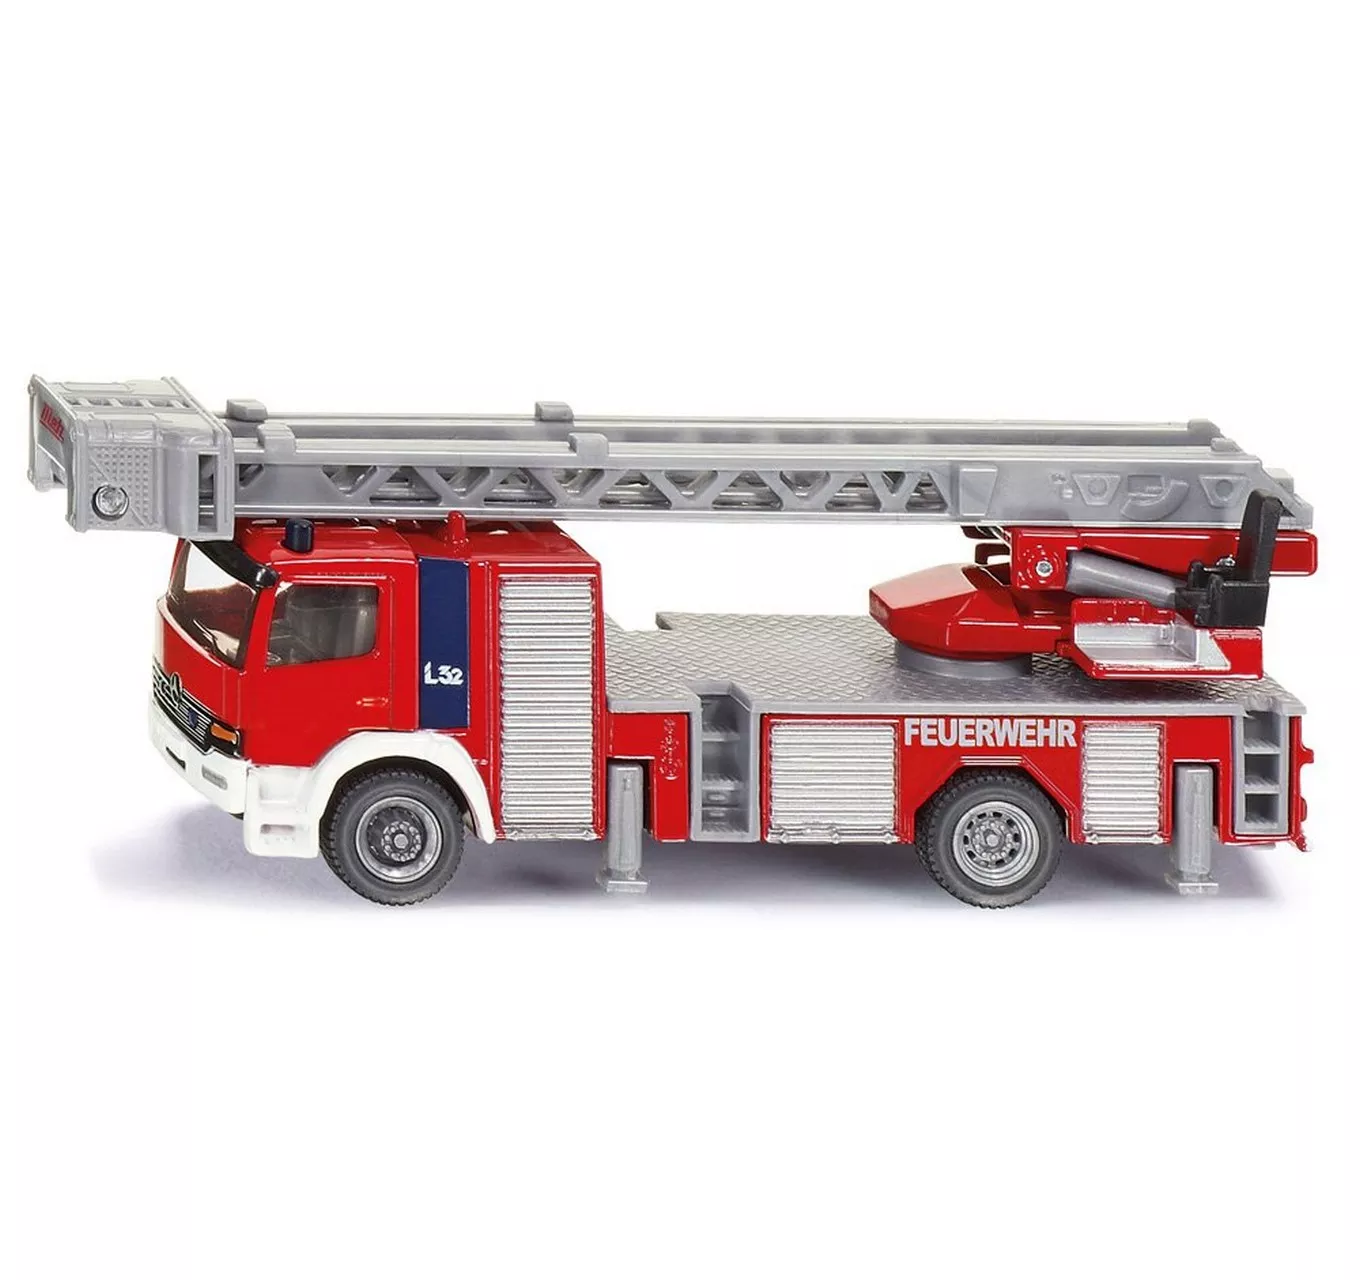 Fire Engine 1:87